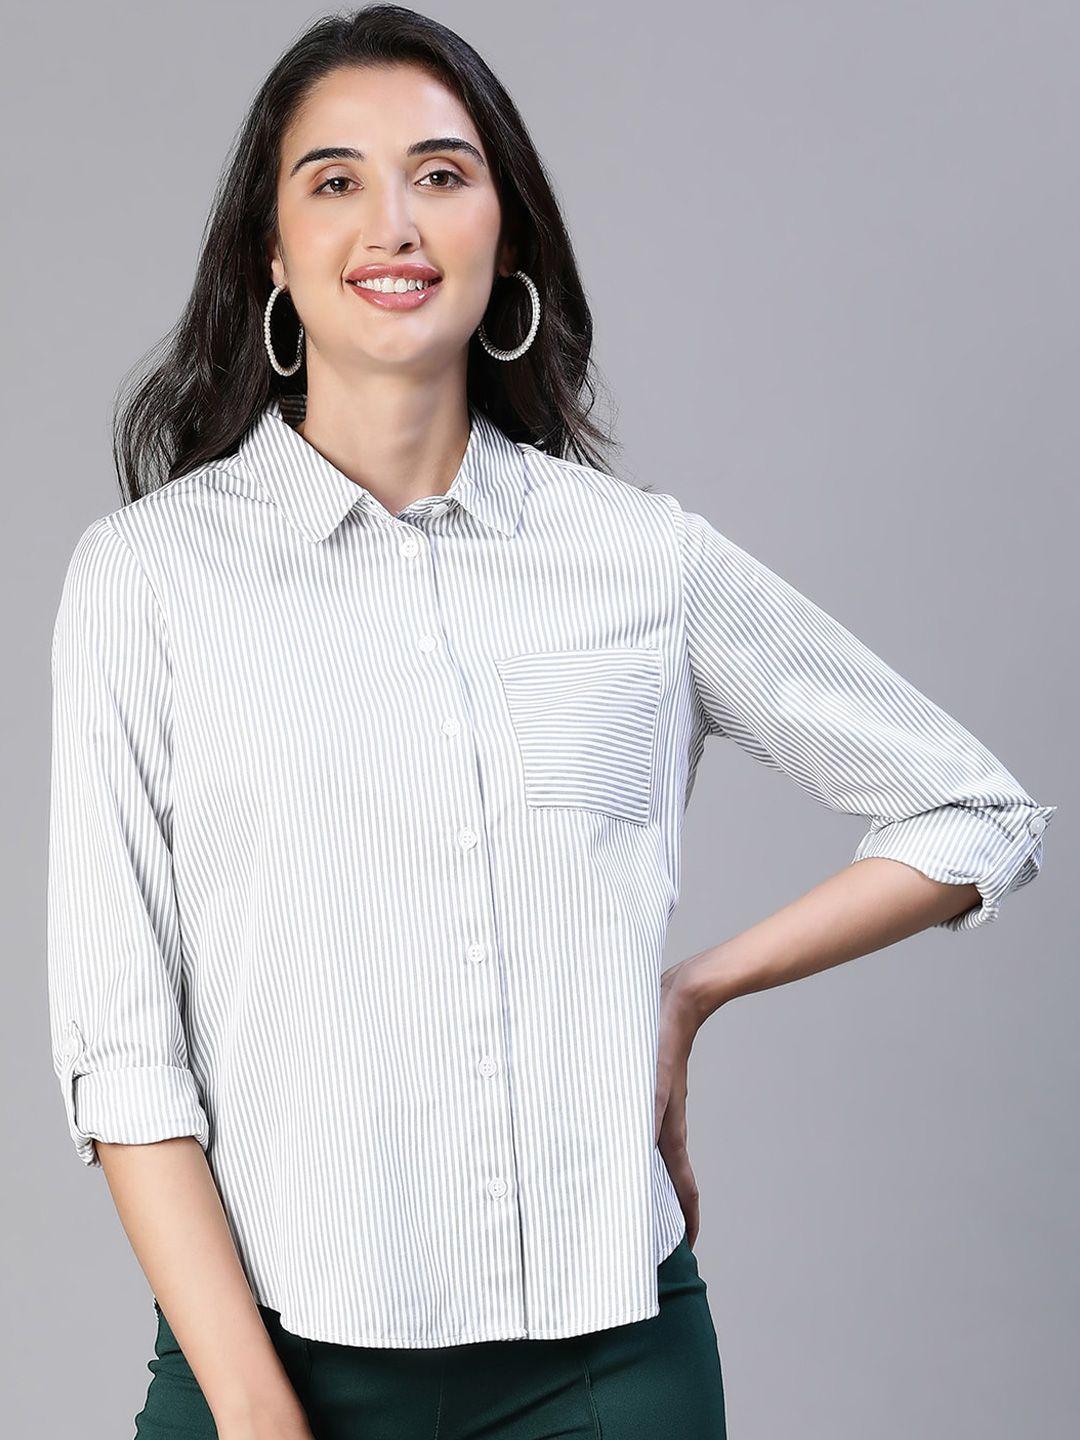 oxolloxo vertical striped smart cotton casual shirt